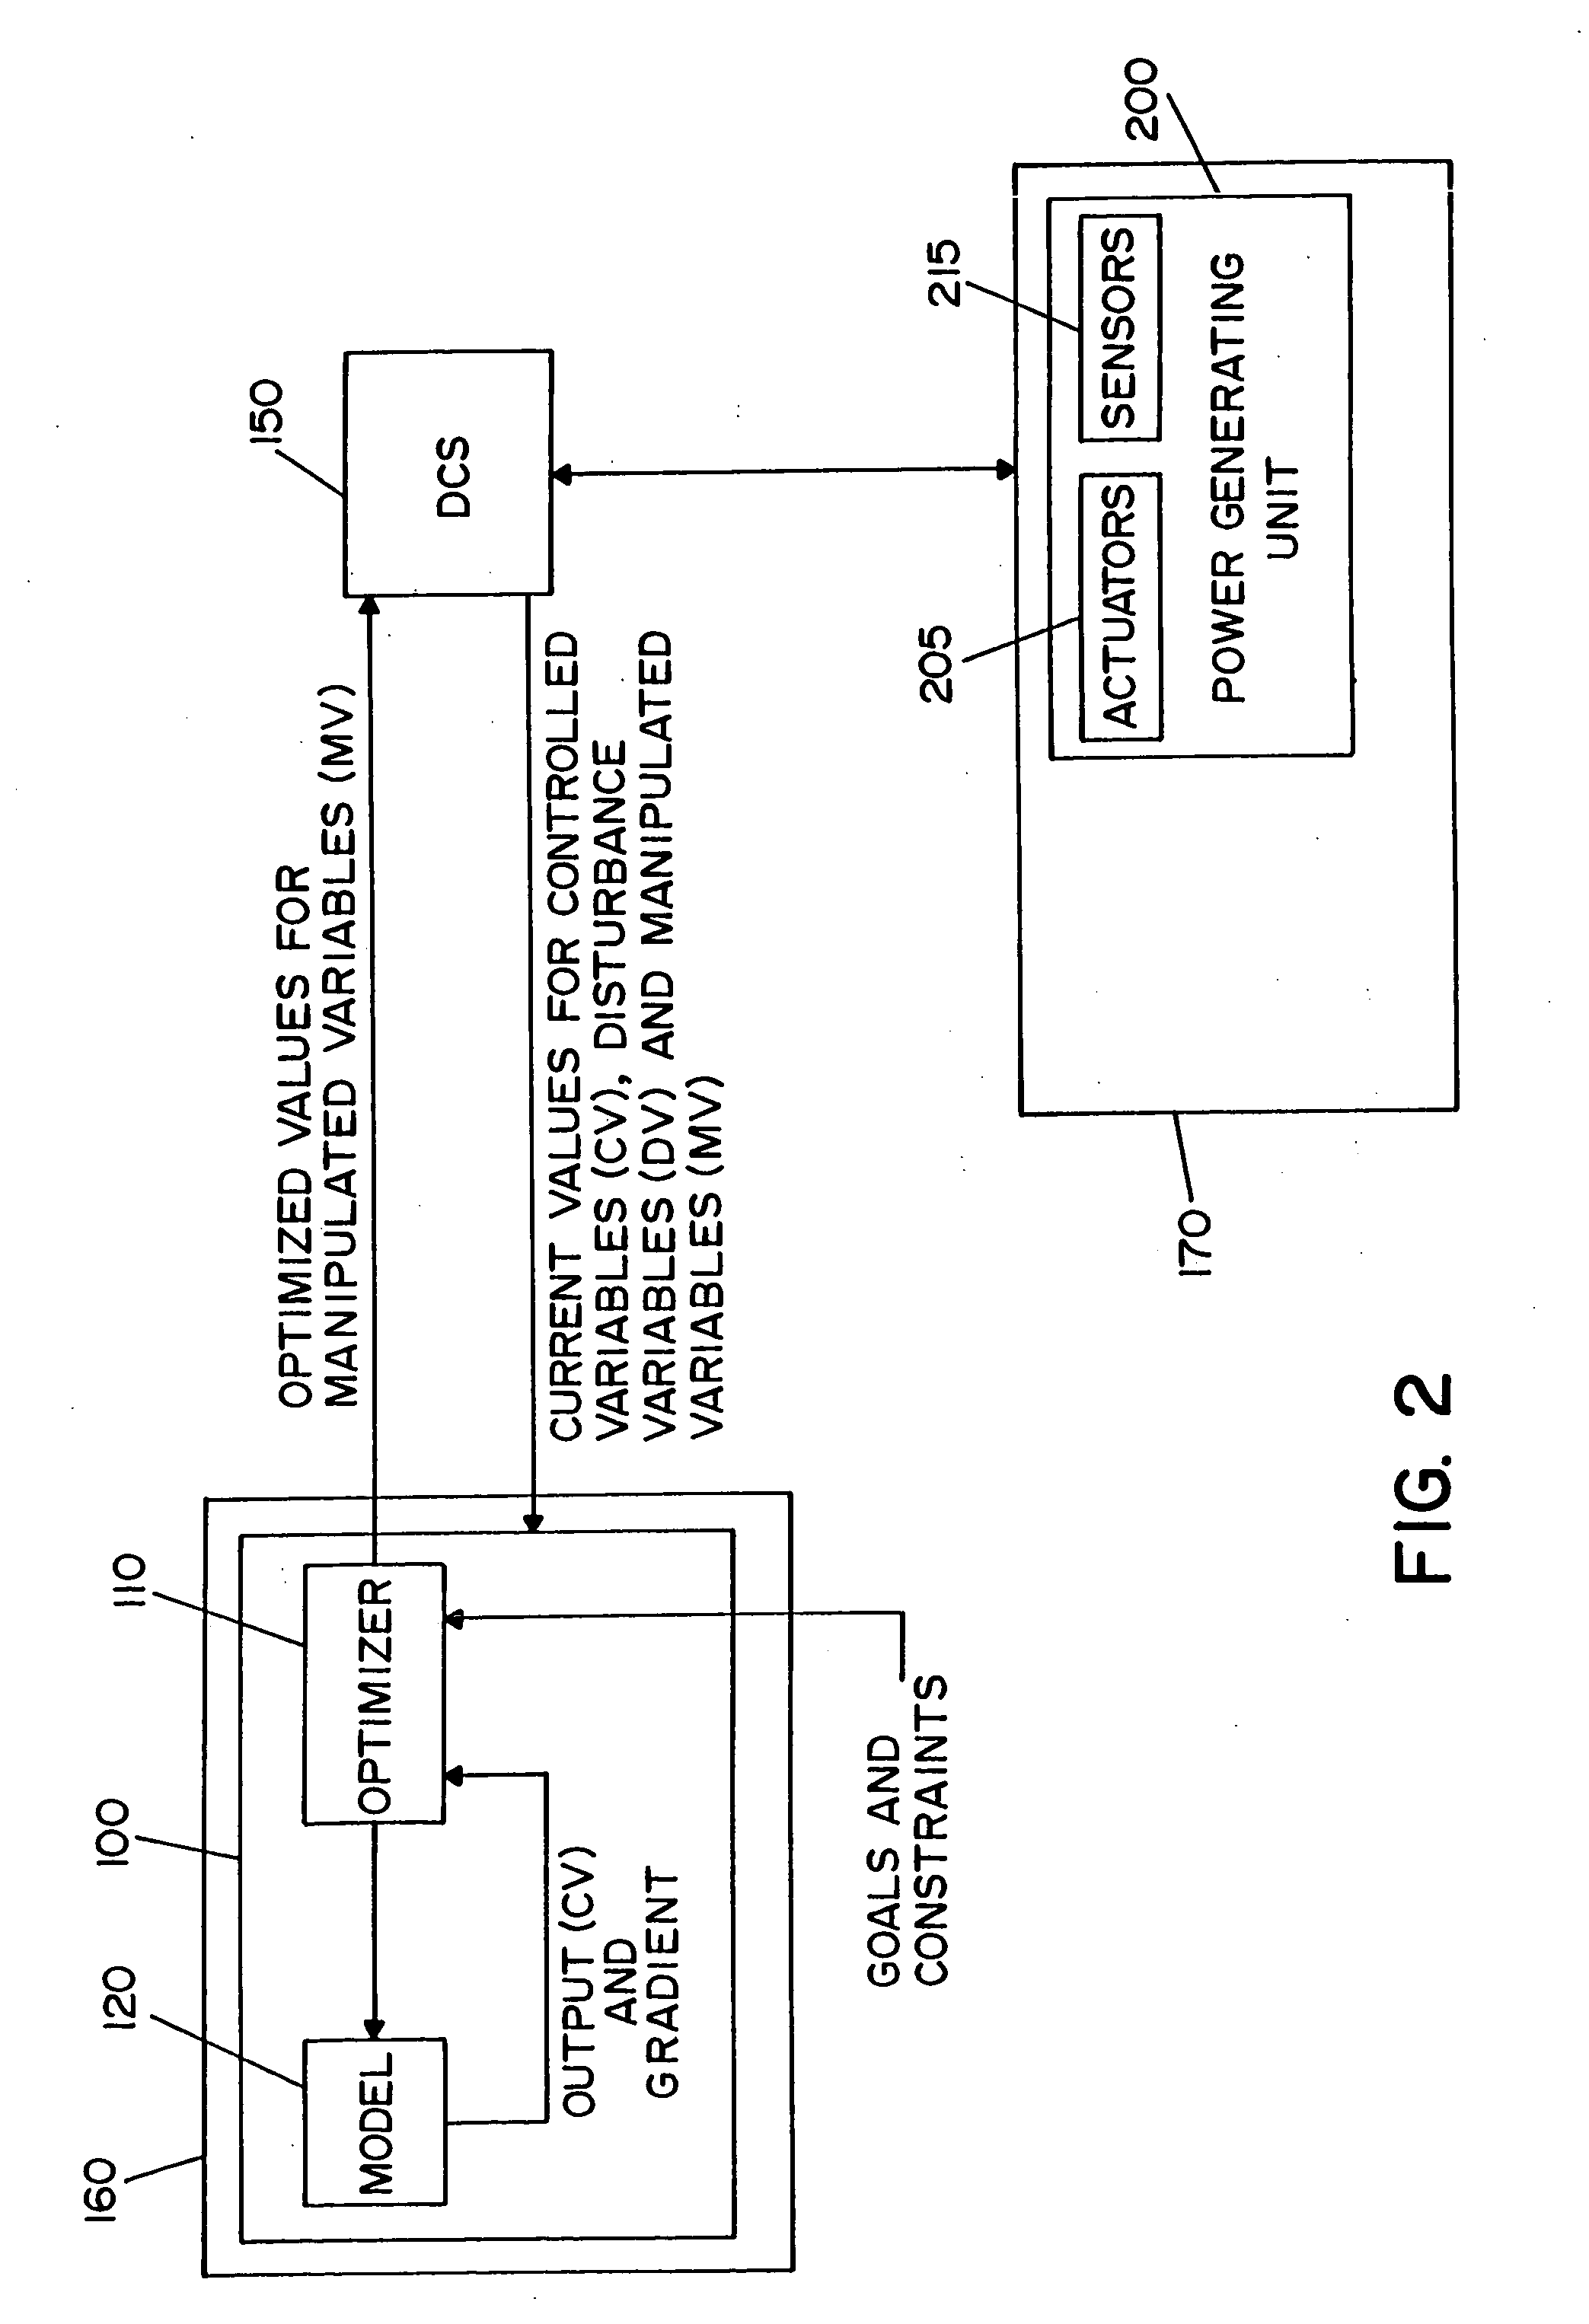 Model based optimization of a single or multiple power generating units